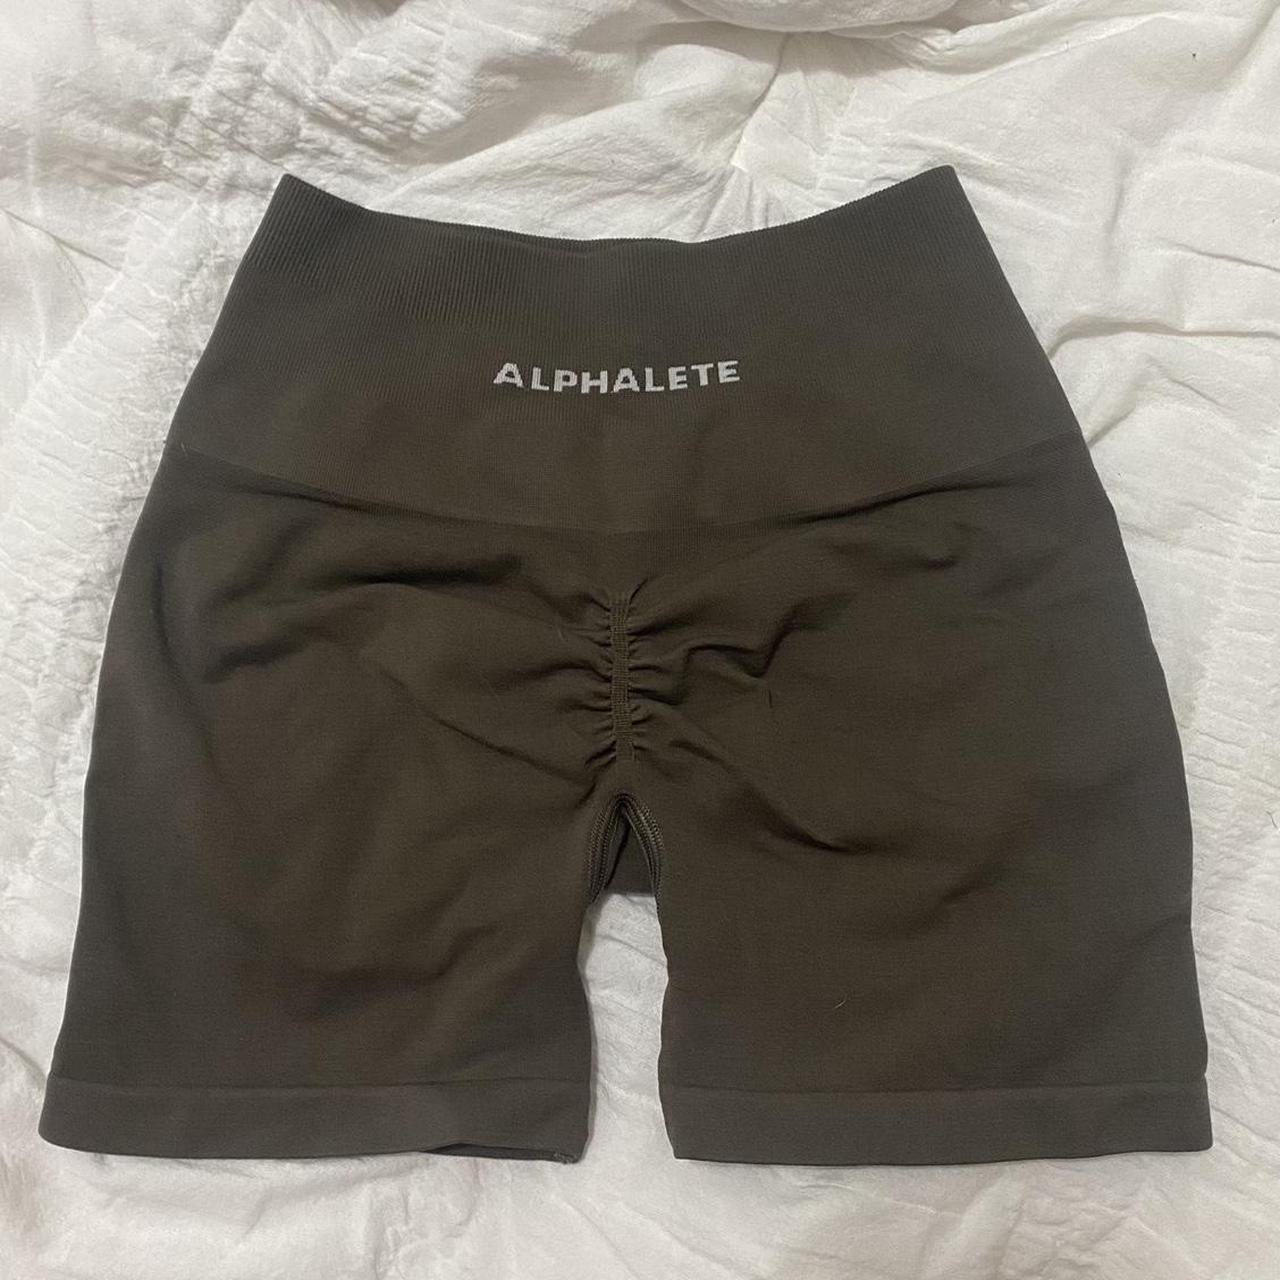 Alphalete Women's Brown and Tan Shorts